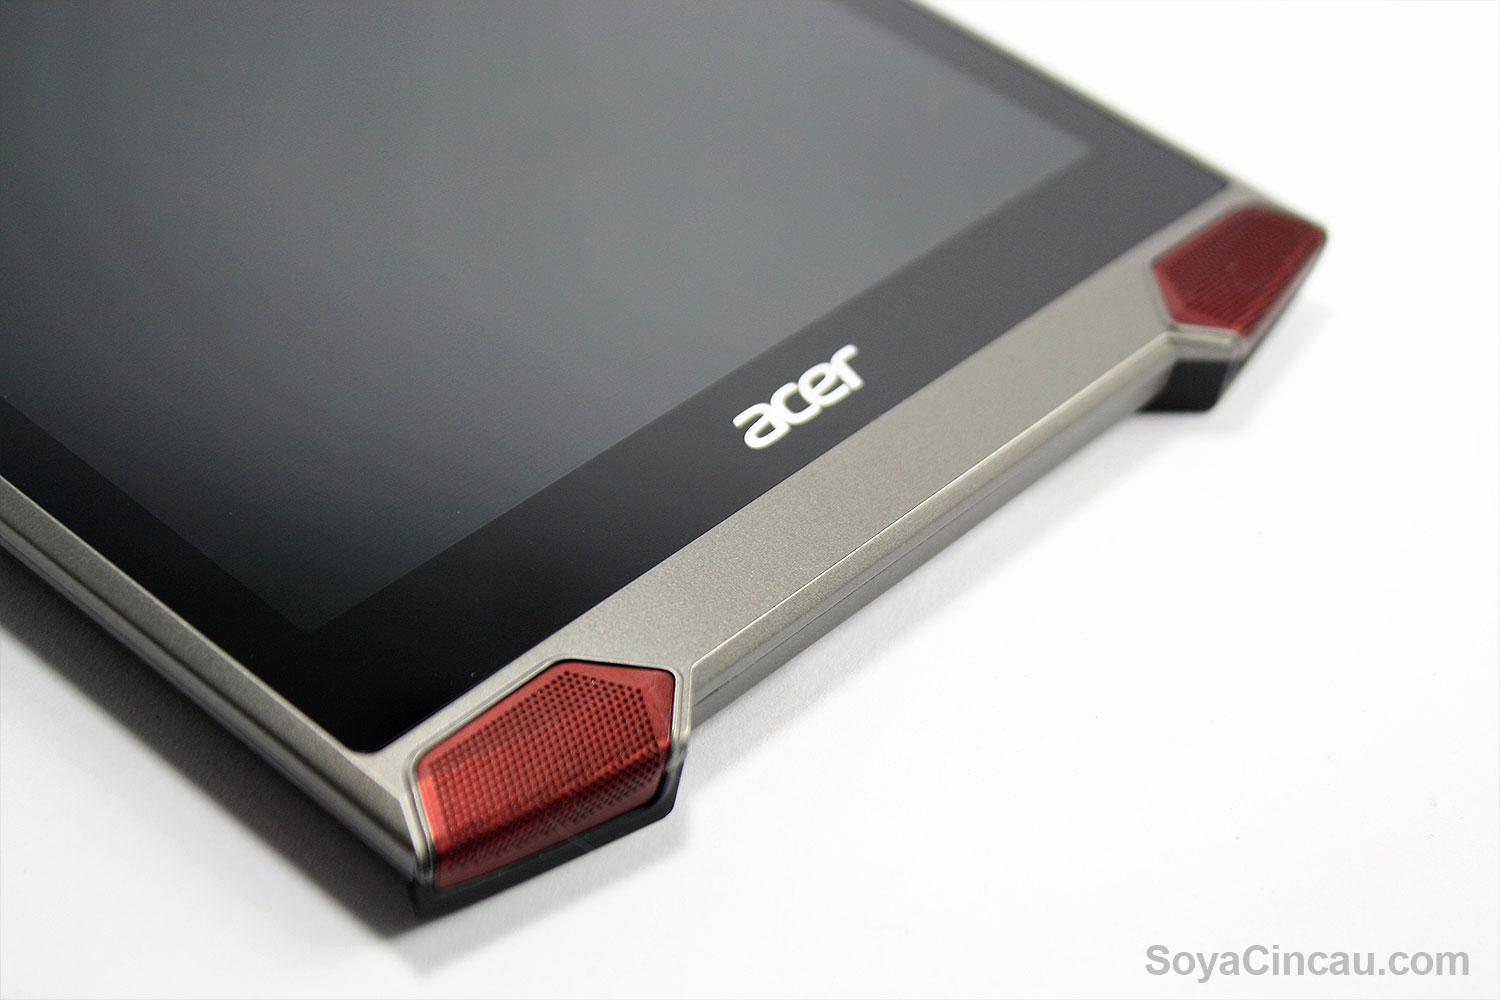 160122-Acer-Predator-Tablet-Review-04